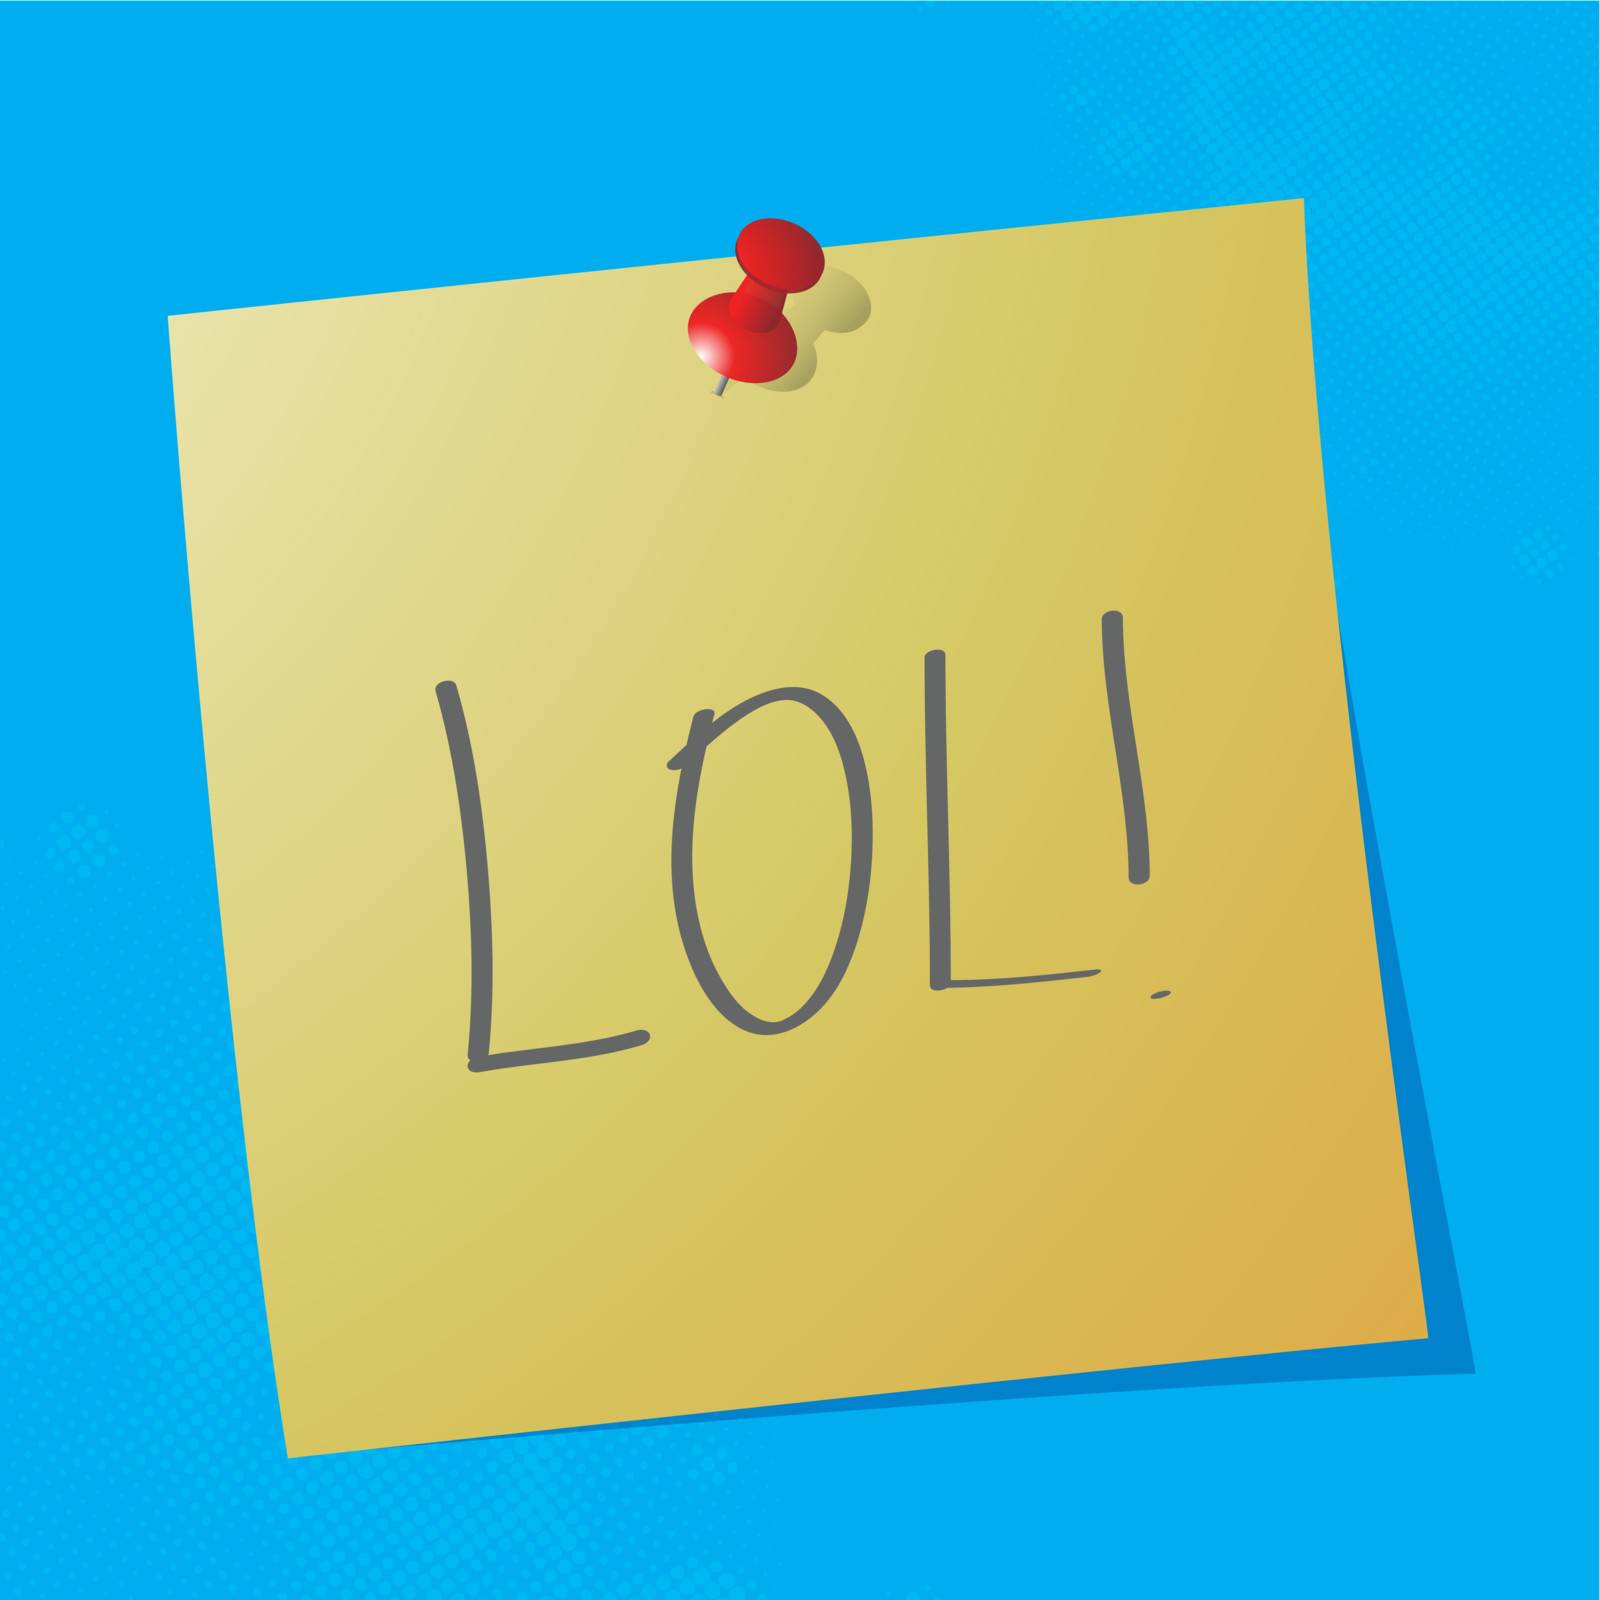 "lol" handwritten acronym message on sticky paper, eps10 vector illustration